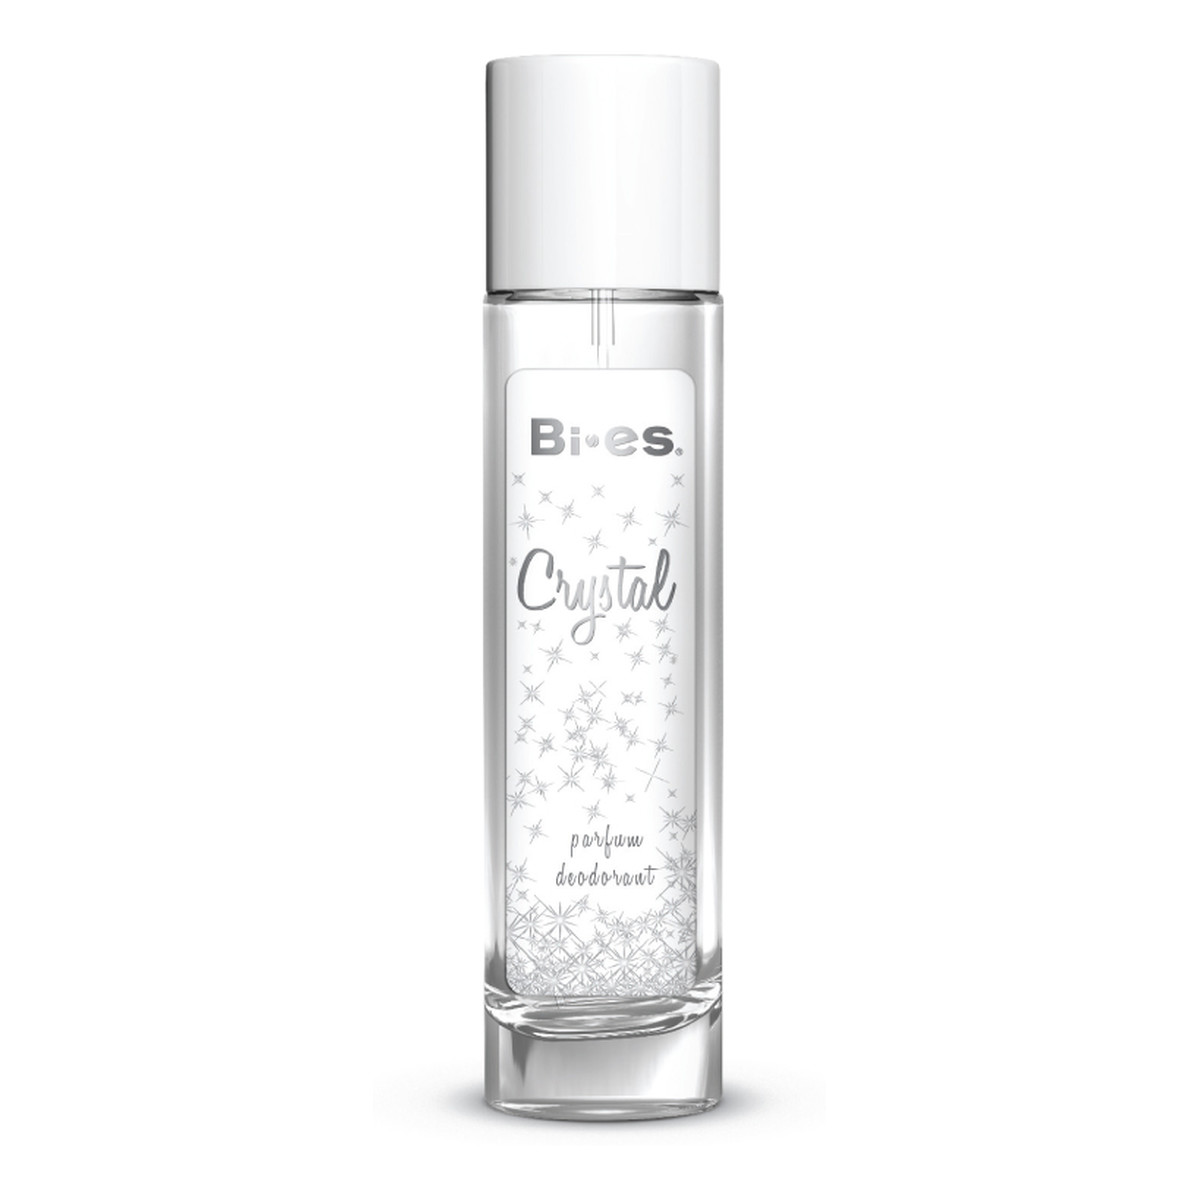 Bi-es Crystal Dezodorant Spray 75ml